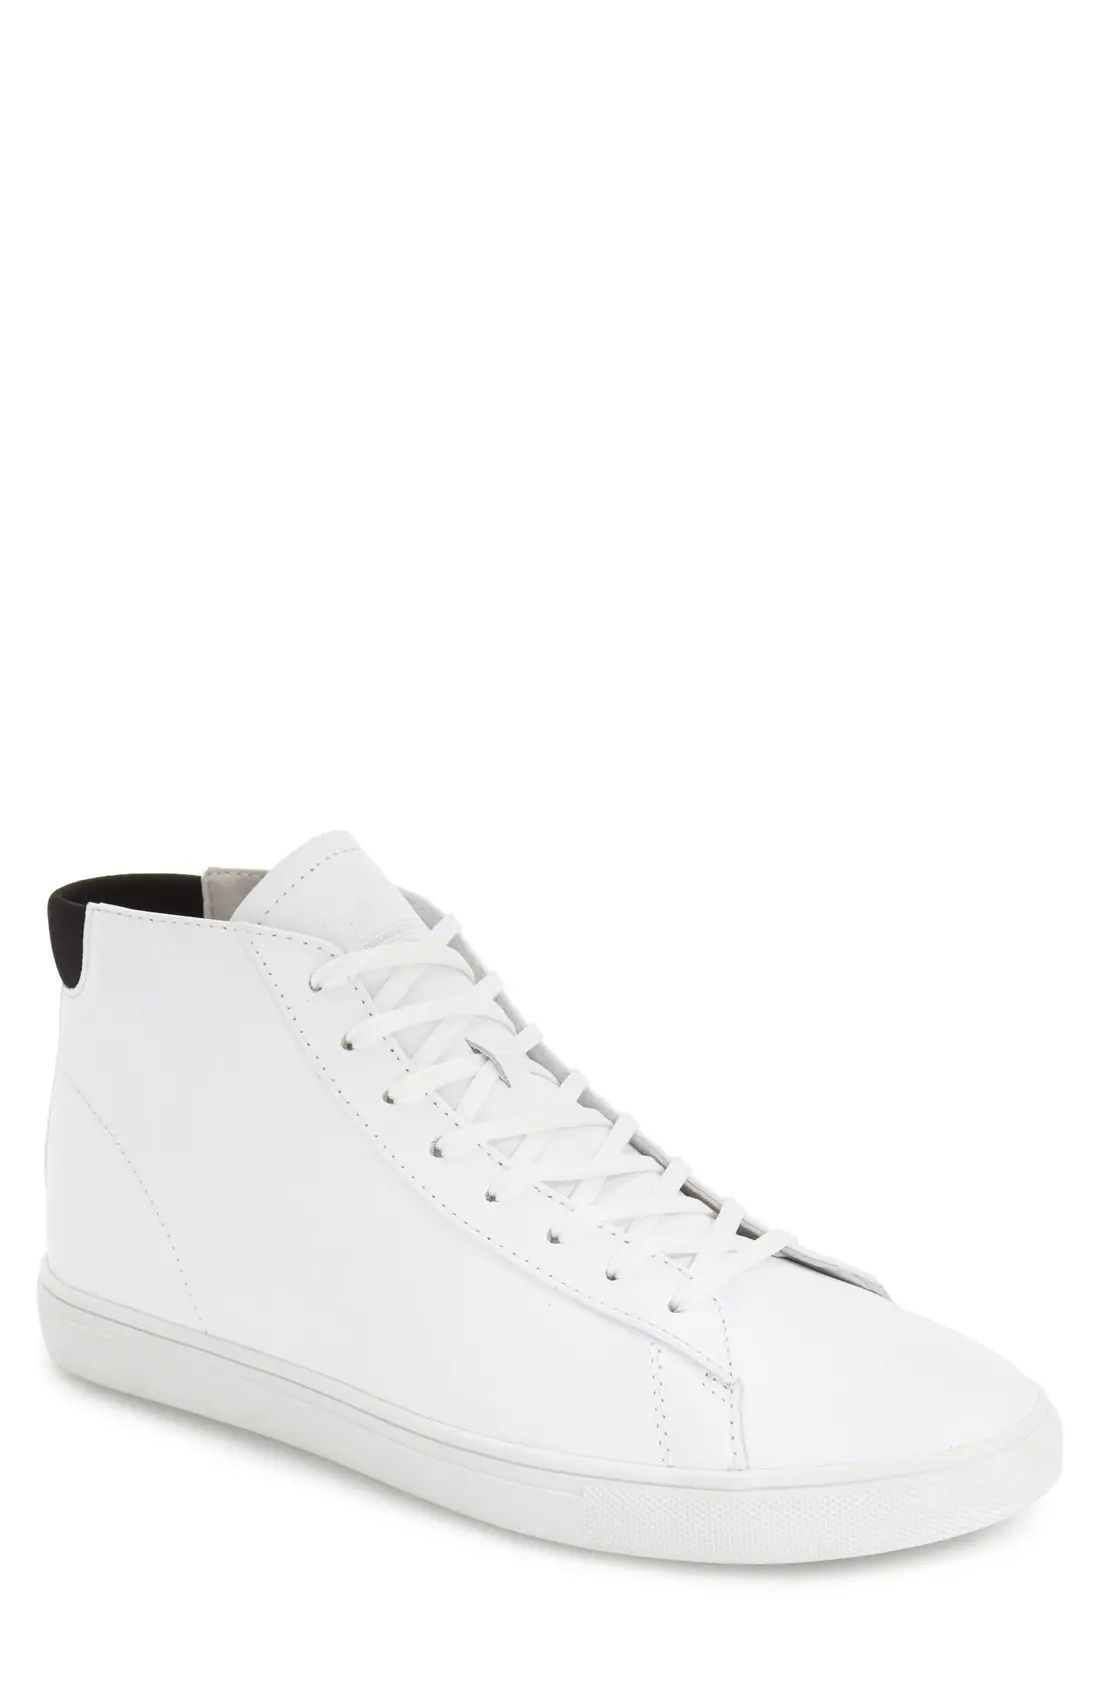 Men's Clae Bradley Mid Sneaker, Size 13 M - White | Nordstrom